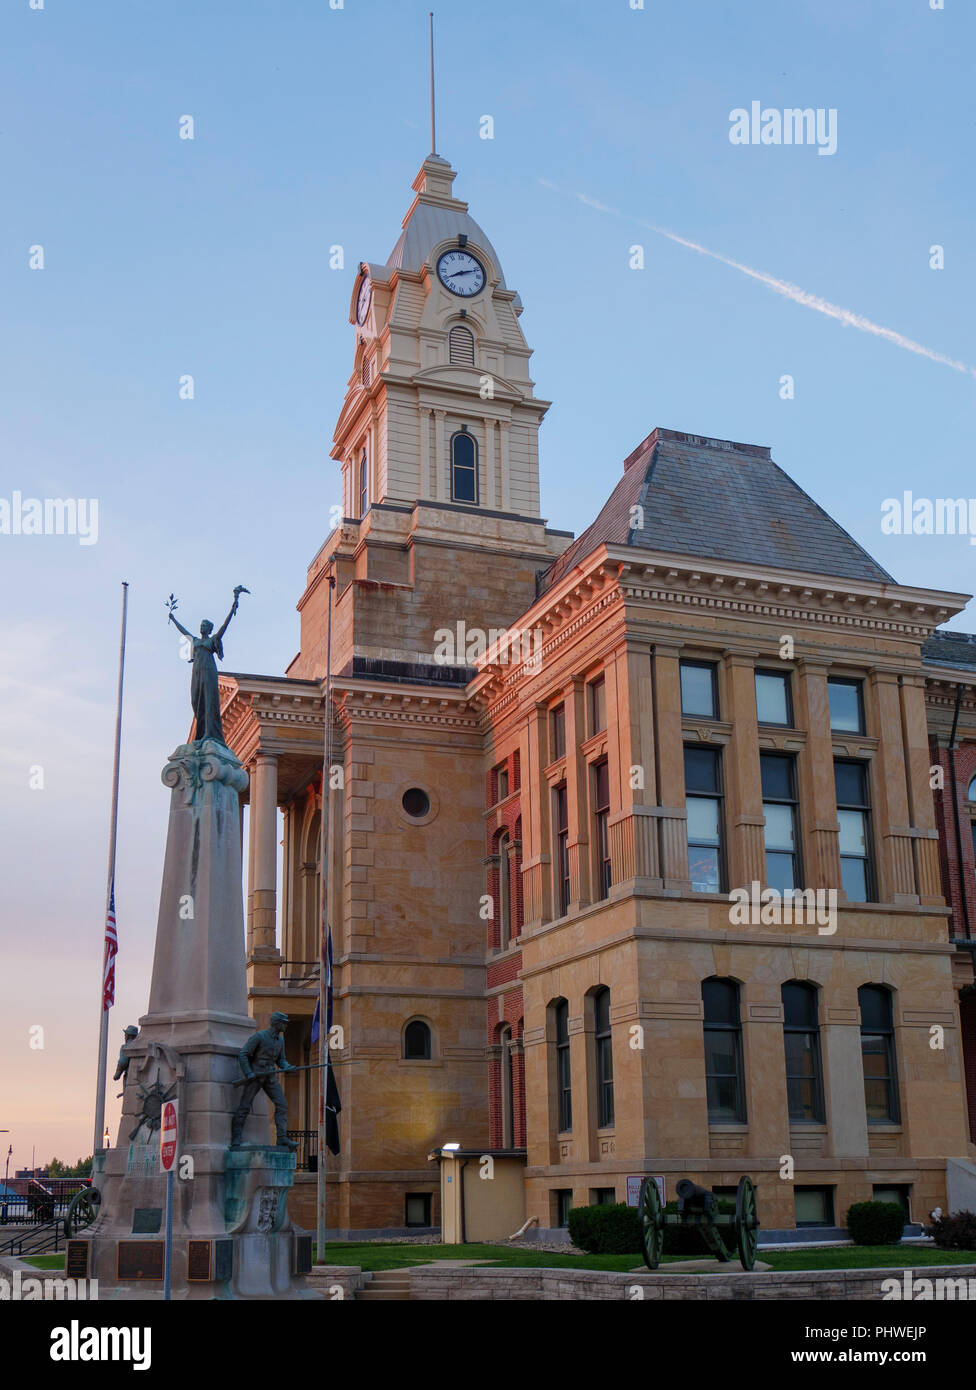 Montgomery County Courthouse. Crawfordsville, Indiana Stockfotografie ...